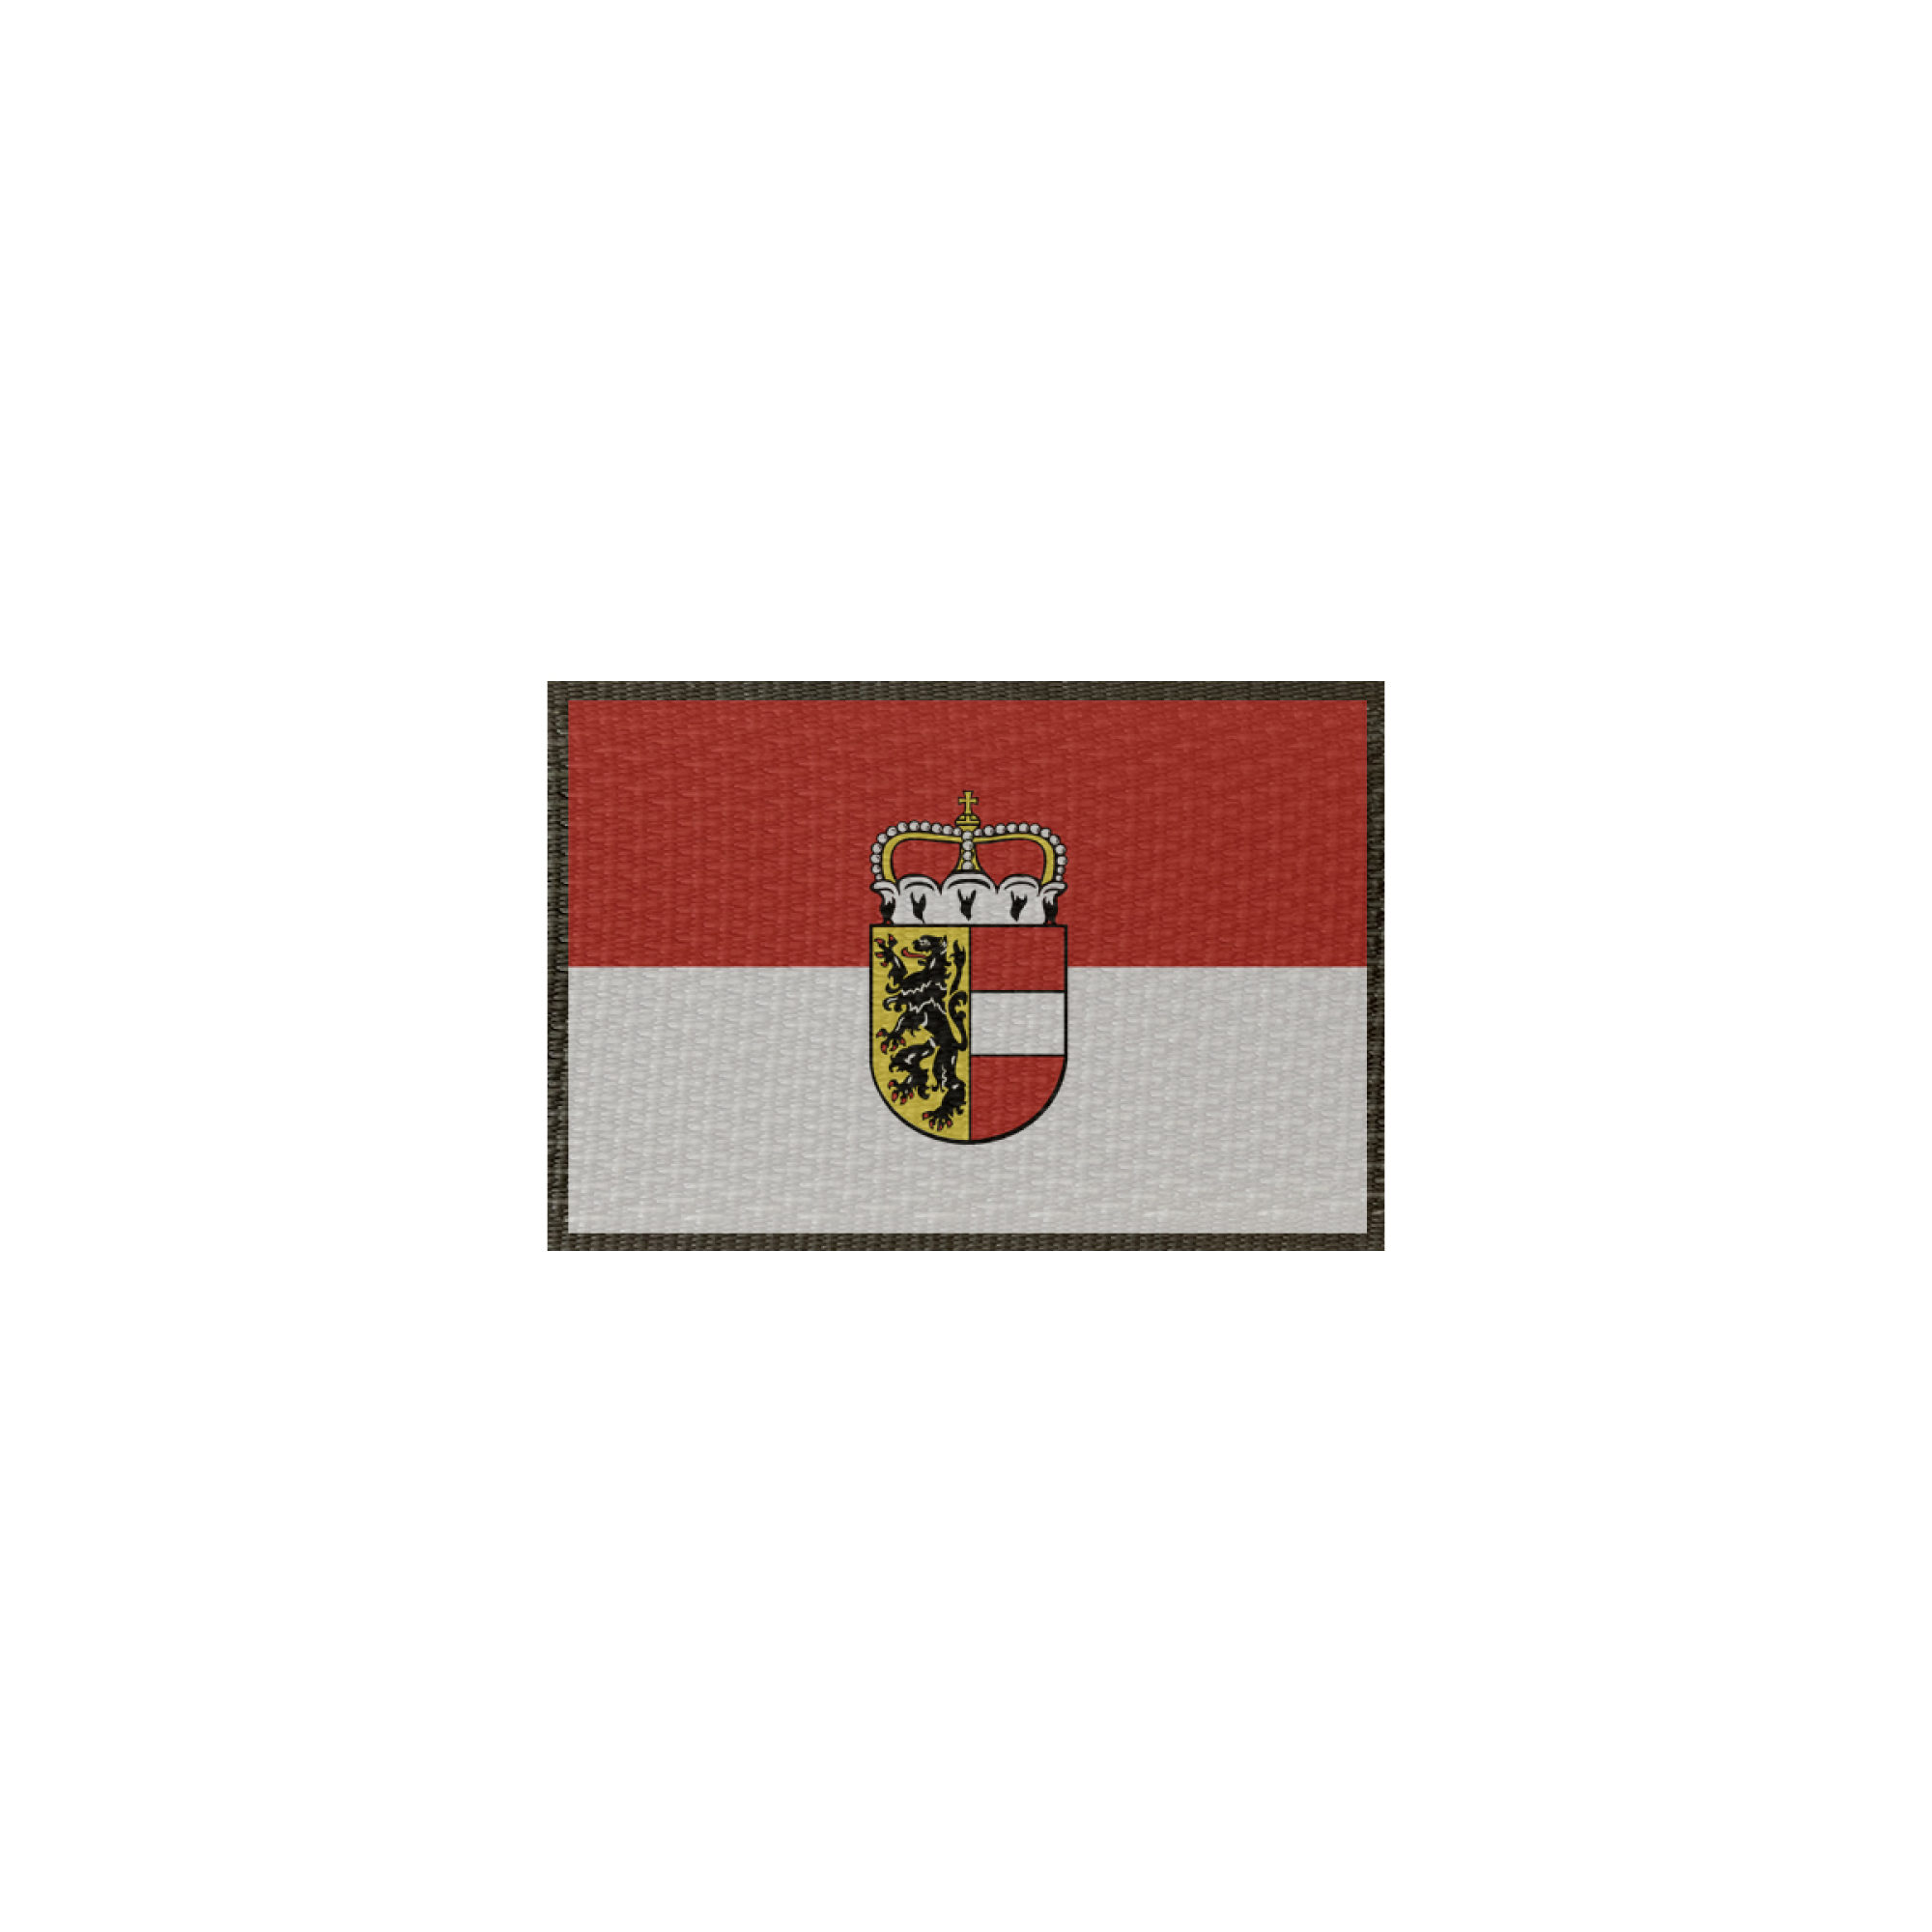 Patch Flagge Salzburg 75x50mm, Klett